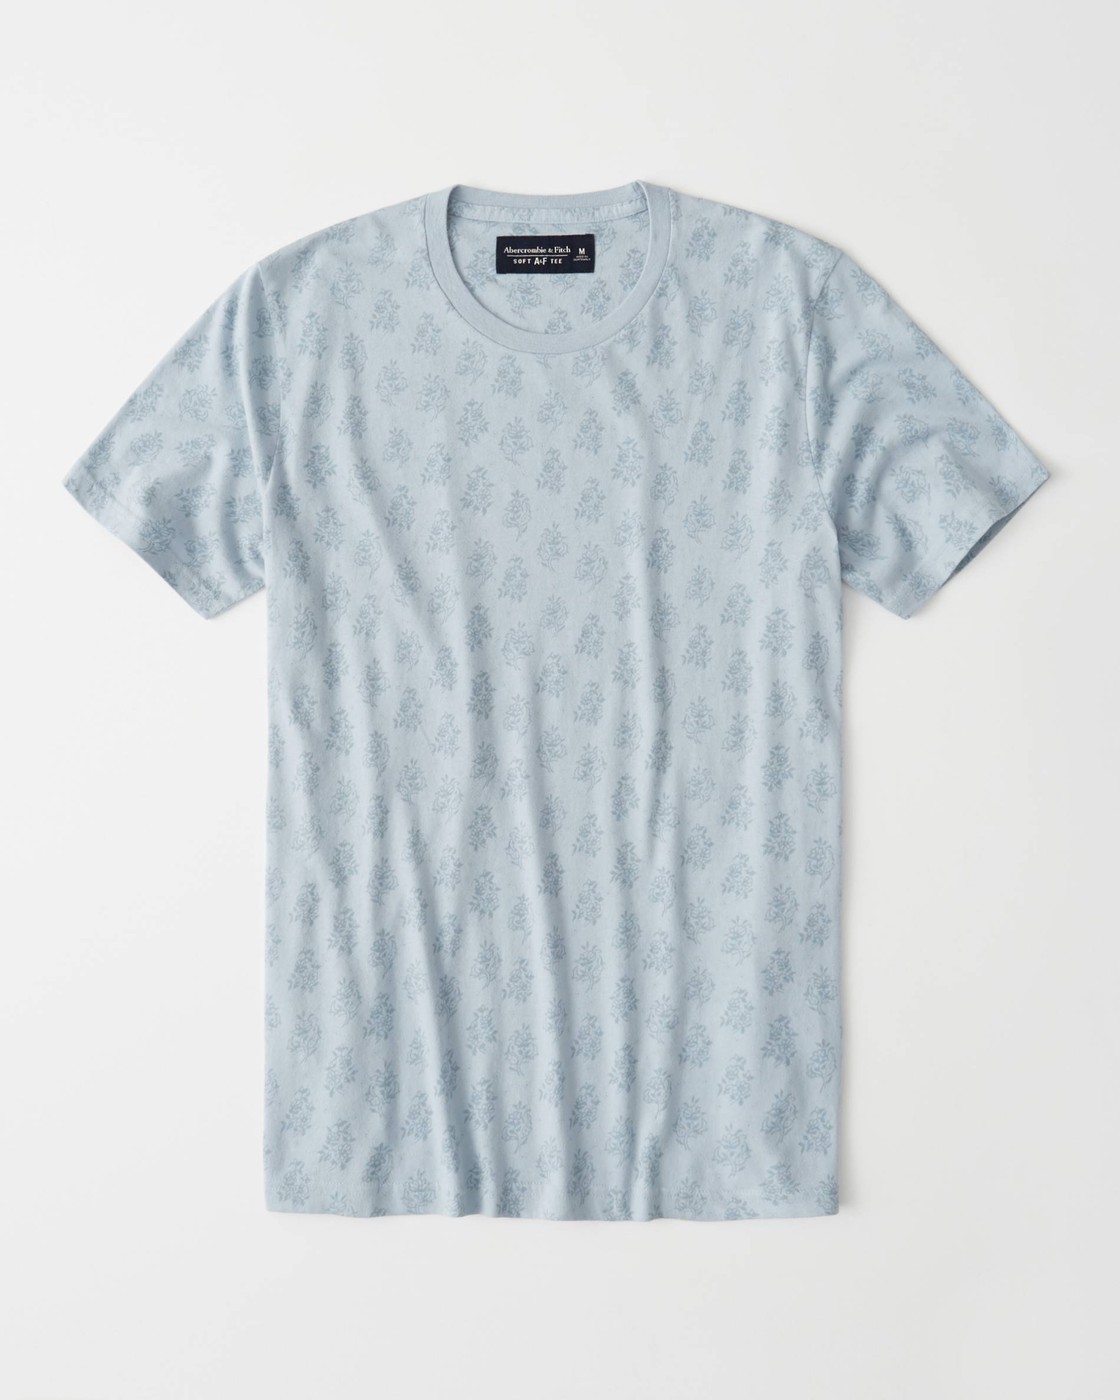 Голубая футболка - мужская футболка Abercrombie & Fitch, M, M